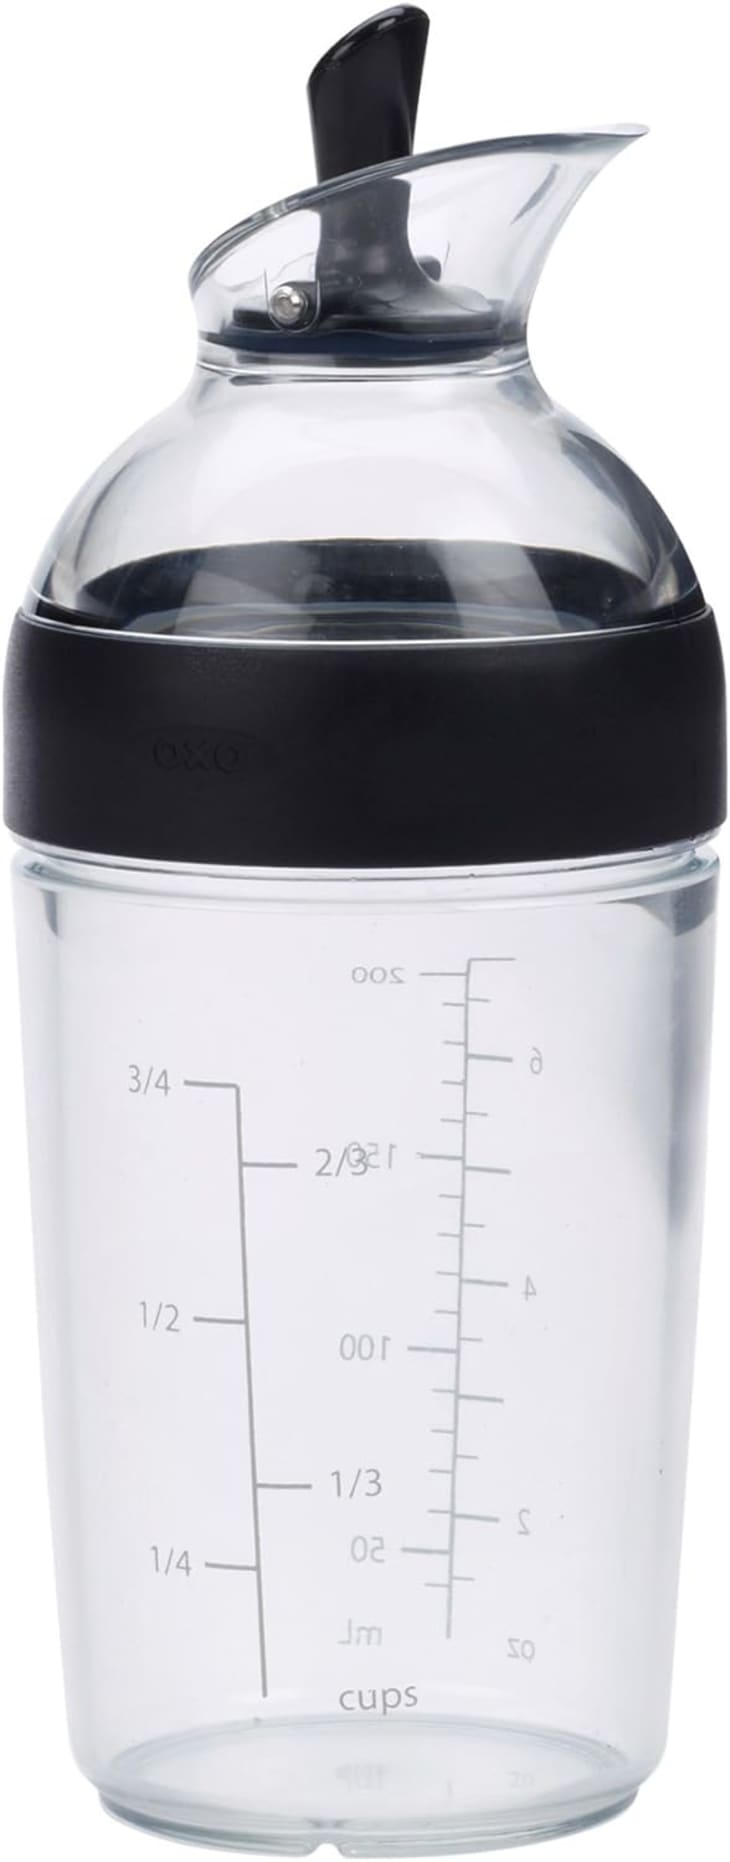 Product Image: OXO Good Grips Little Salad Dressing Shaker